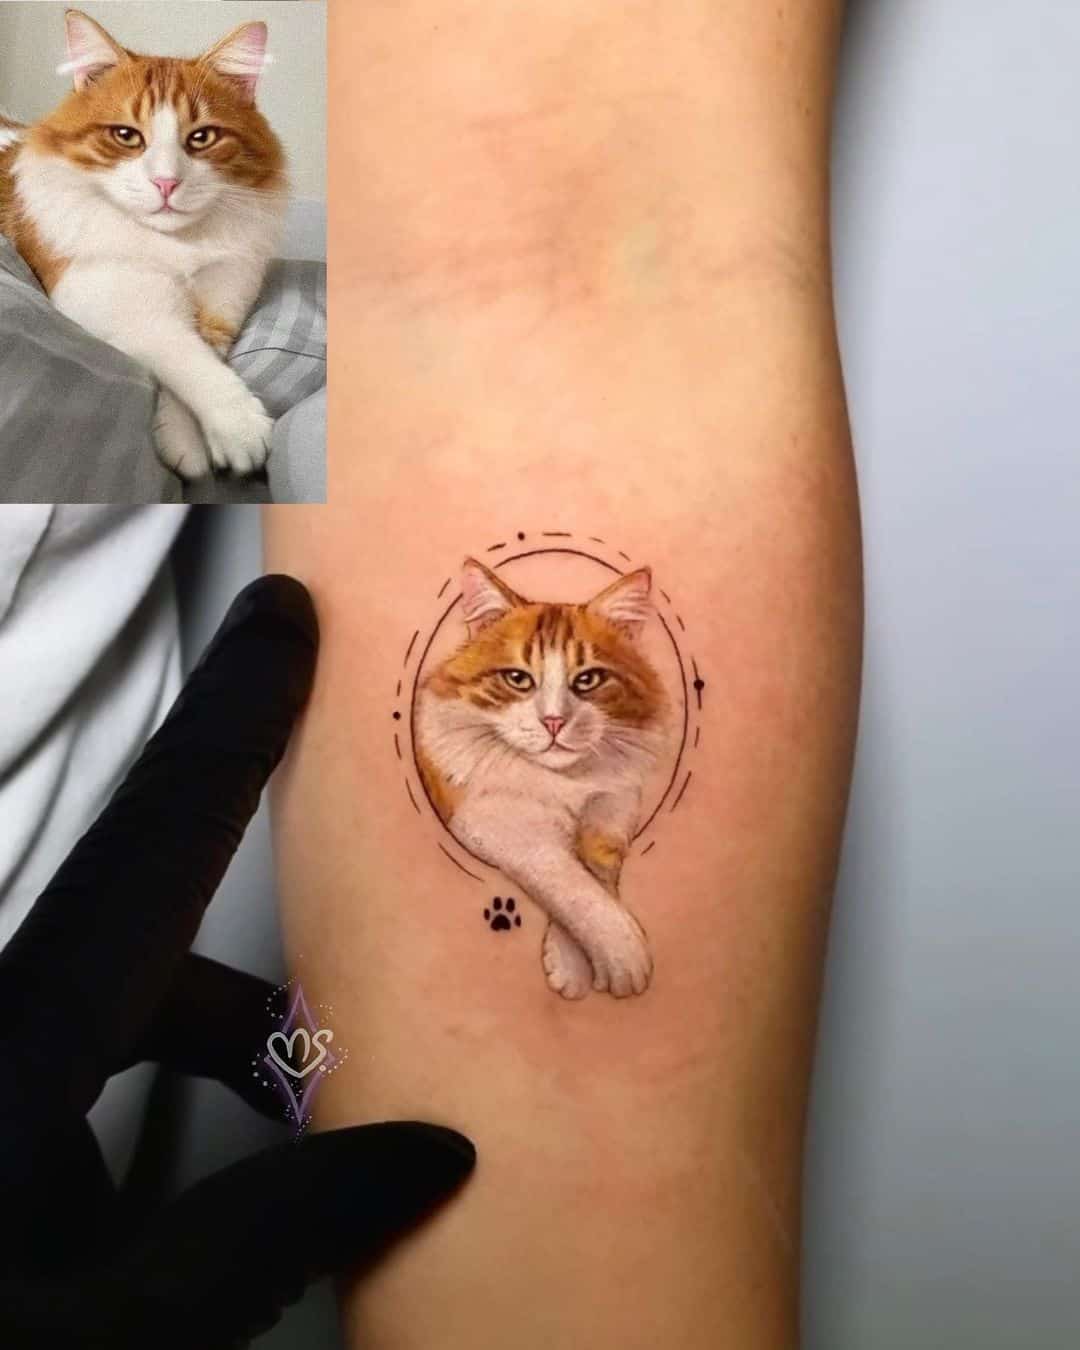 Stunning cat tattoo design by mervesenguuntattooer